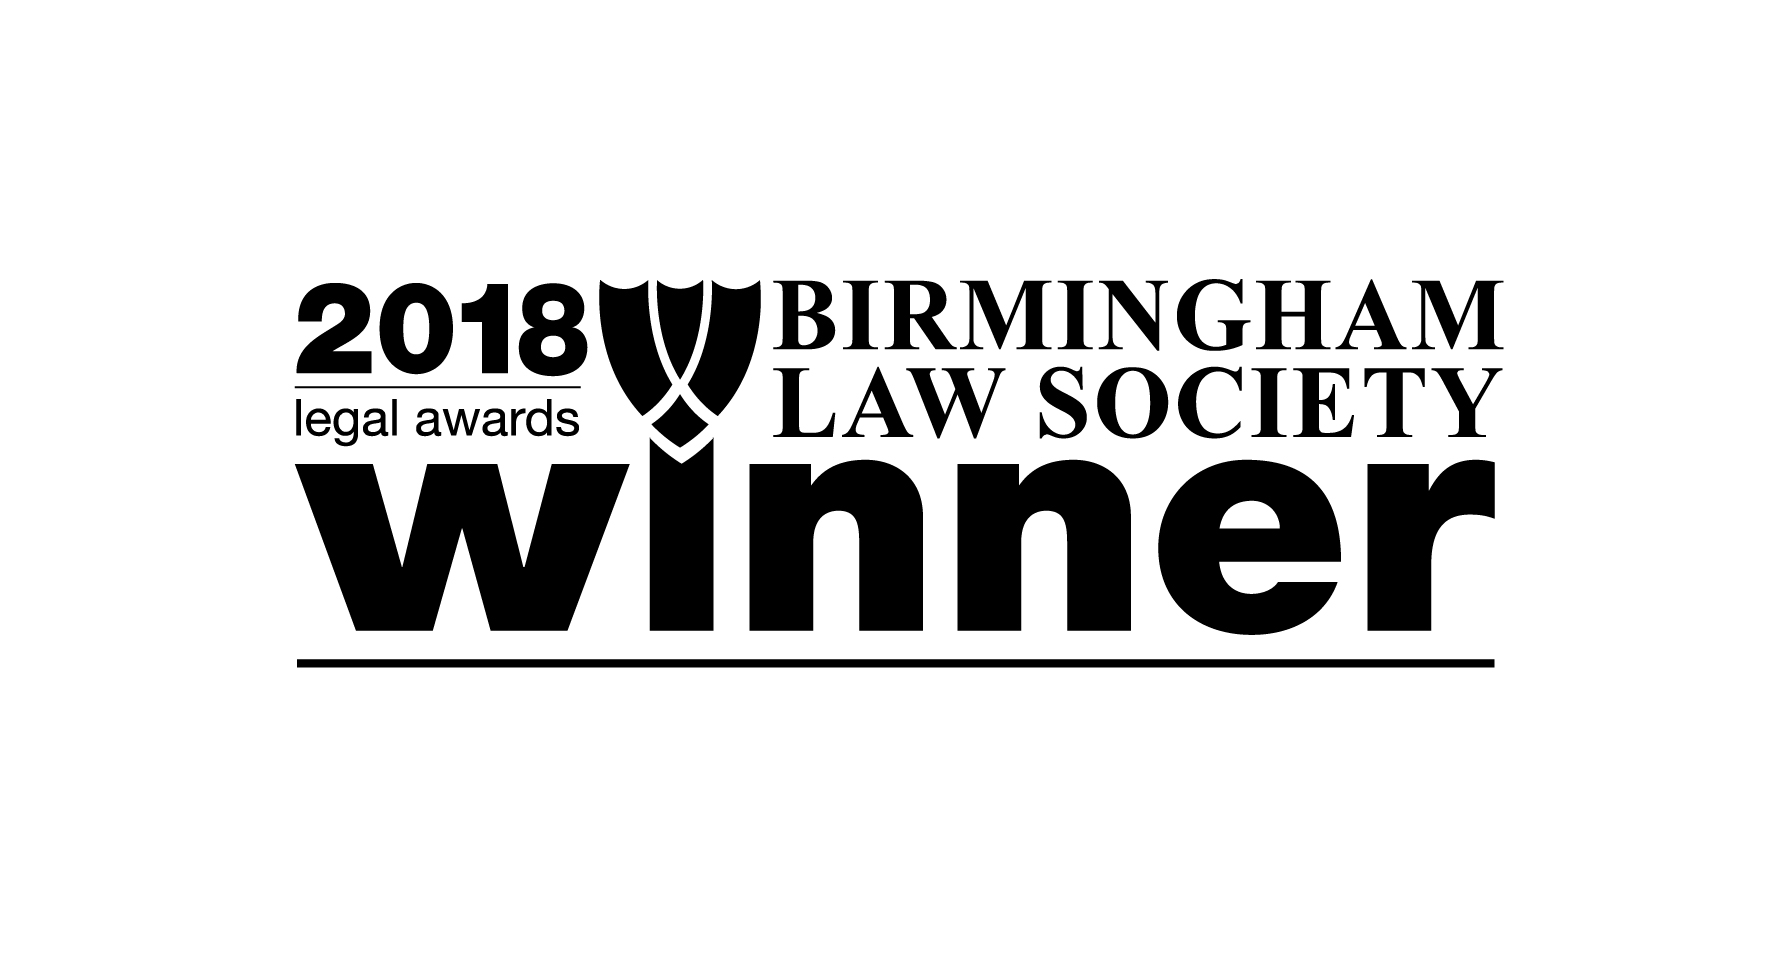 Birmingham Law Society 2018 Legal Awards - Winner